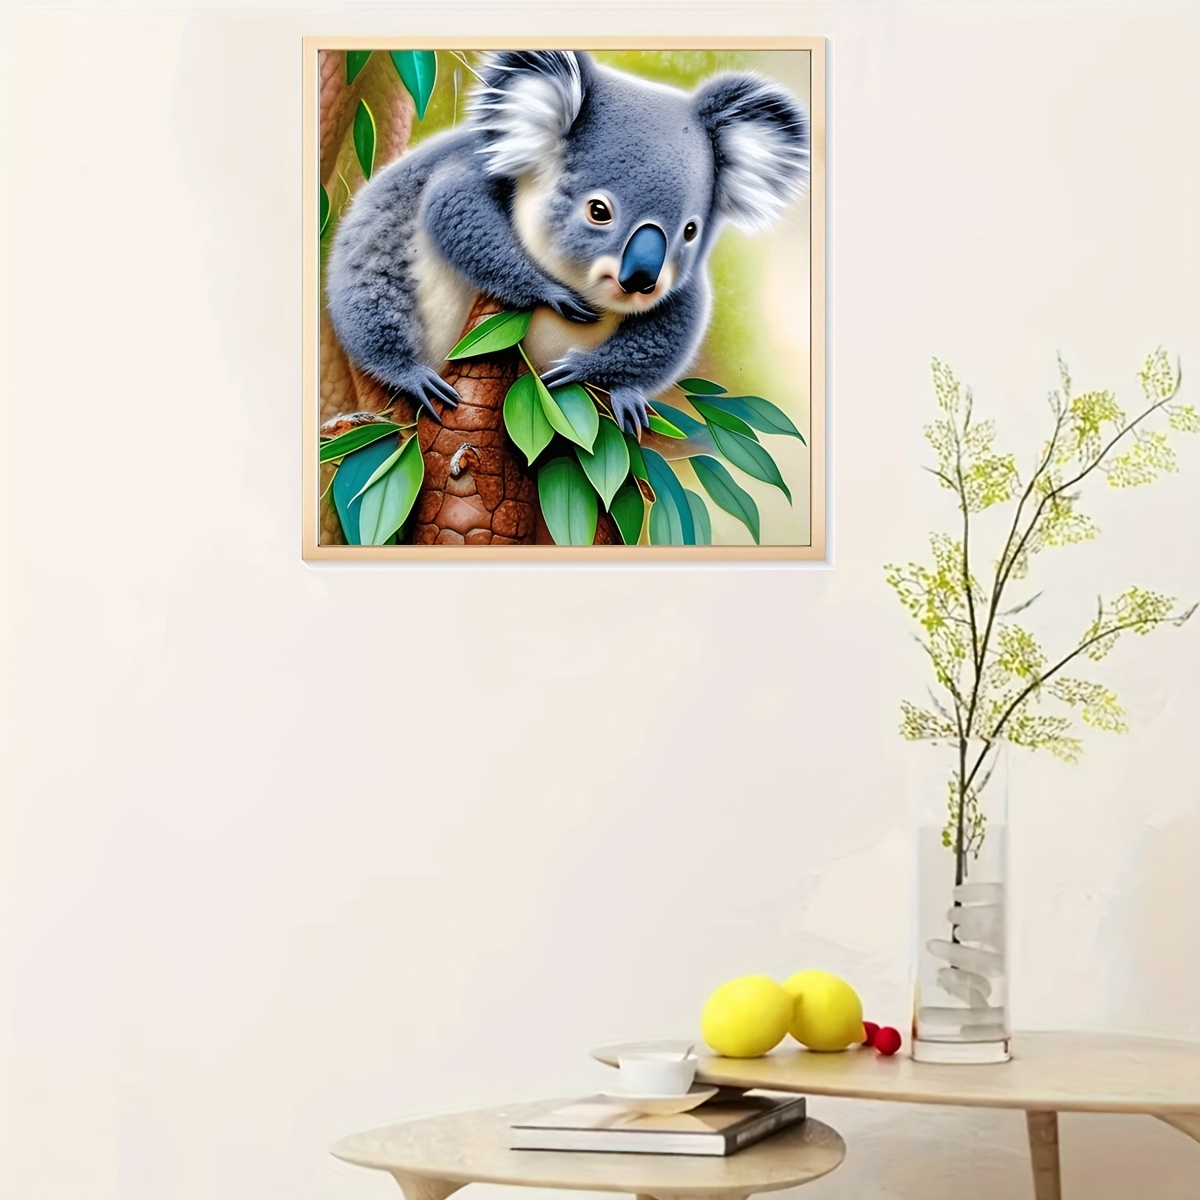 5D Diamond Painting Watercolor Koala Kit